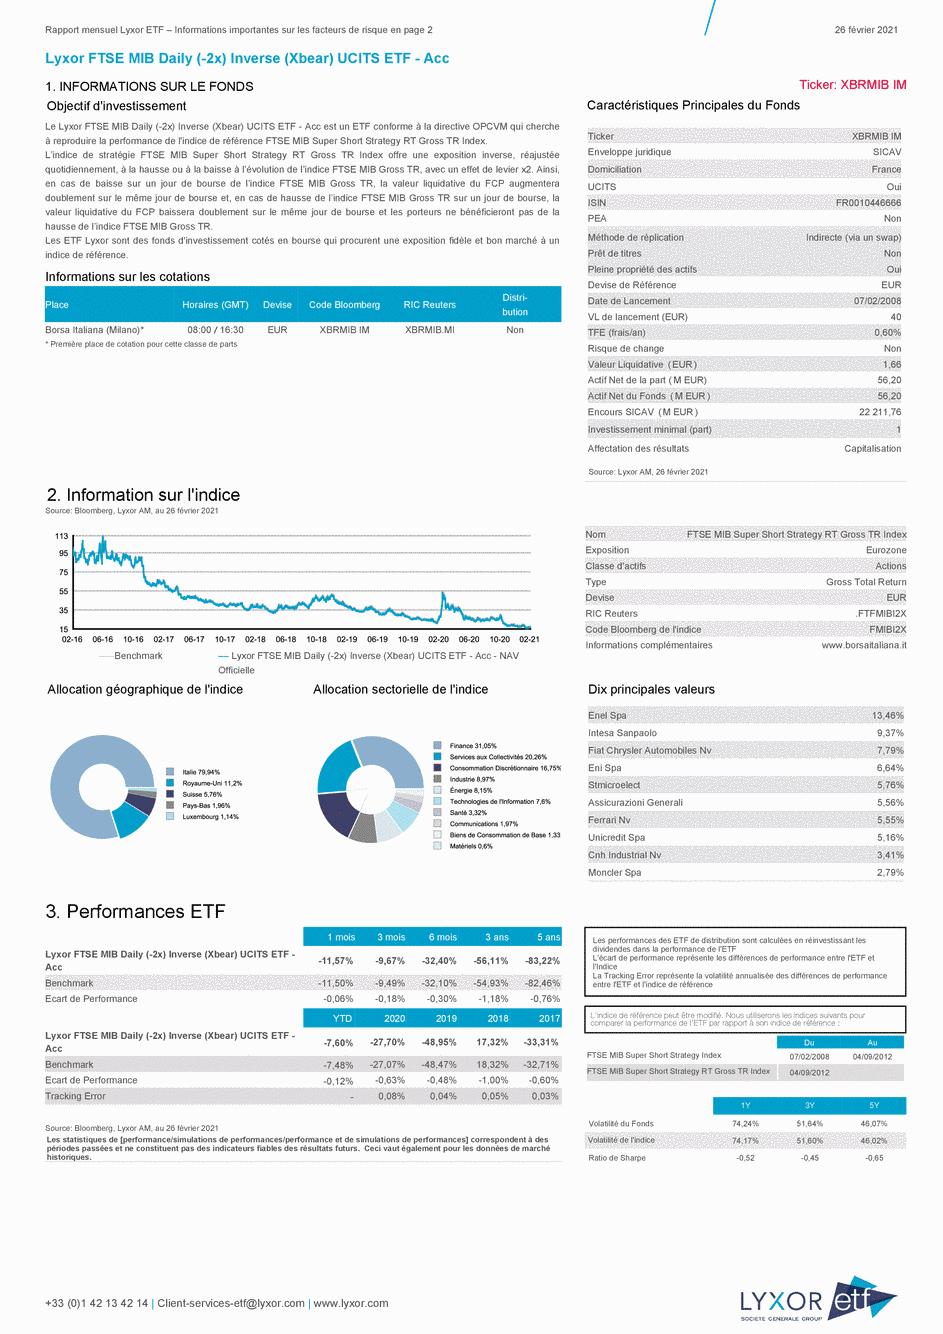 Reporting Lyxor FTSE MIB Daily (-2x) Inverse (Xbear) UCITS ETF - Acc - 26/02/2021 - Français